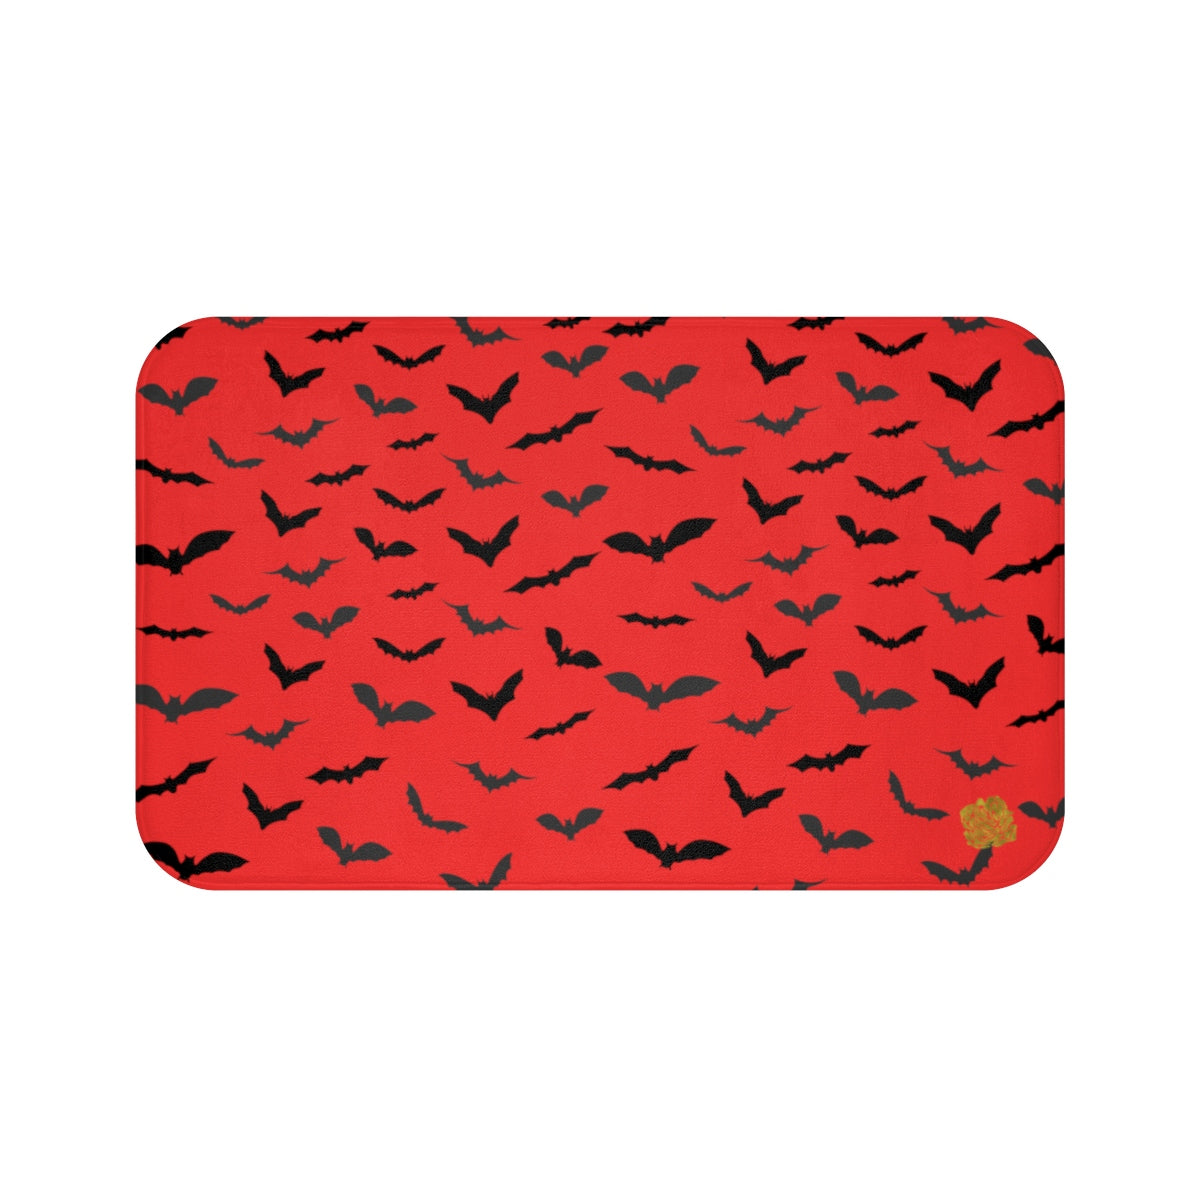 Red Black Flying Bats Designer Halloween Bath Mat-Made in USA-Bath Mat-Large 34x21-Heidi Kimura Art LLC